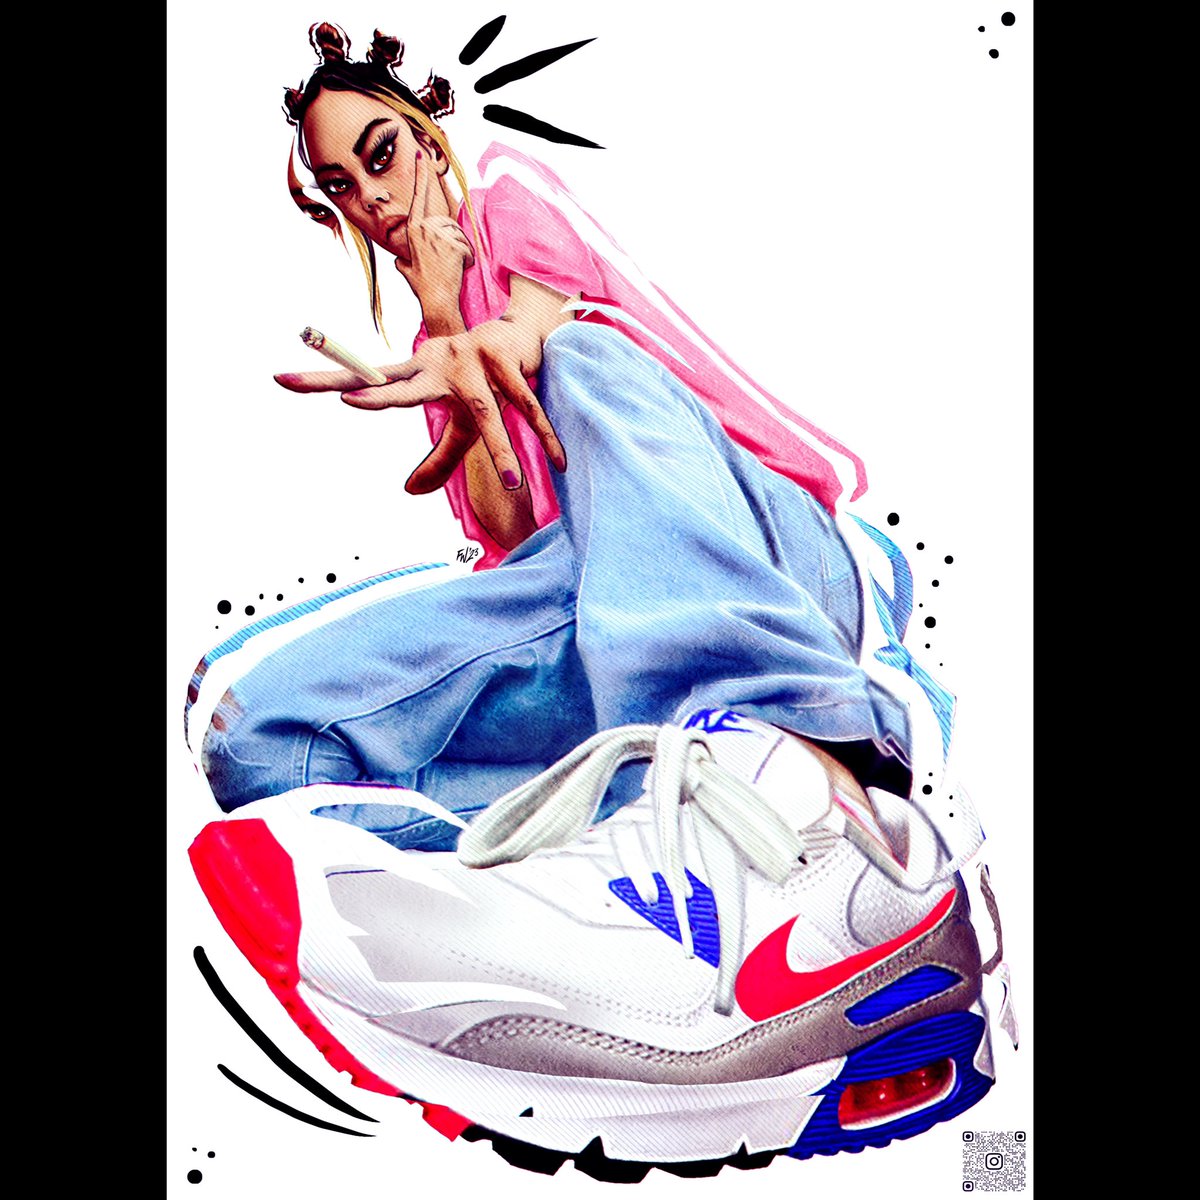 👟 ₵₳₦ ł ₭ł₵₭ ł₮ 👟
By @f0rmula_w0n , 2023 ⚡️

Follow @f0rmula_w0n for more art ⚡️

#commissionsopen and available for #artshows please DM me 

#bgirl #rap #hiphop #breakdance #art #digitalart #retweet #rt #characterdesign #streetart #fashion #nike #nikesirmax #airmax